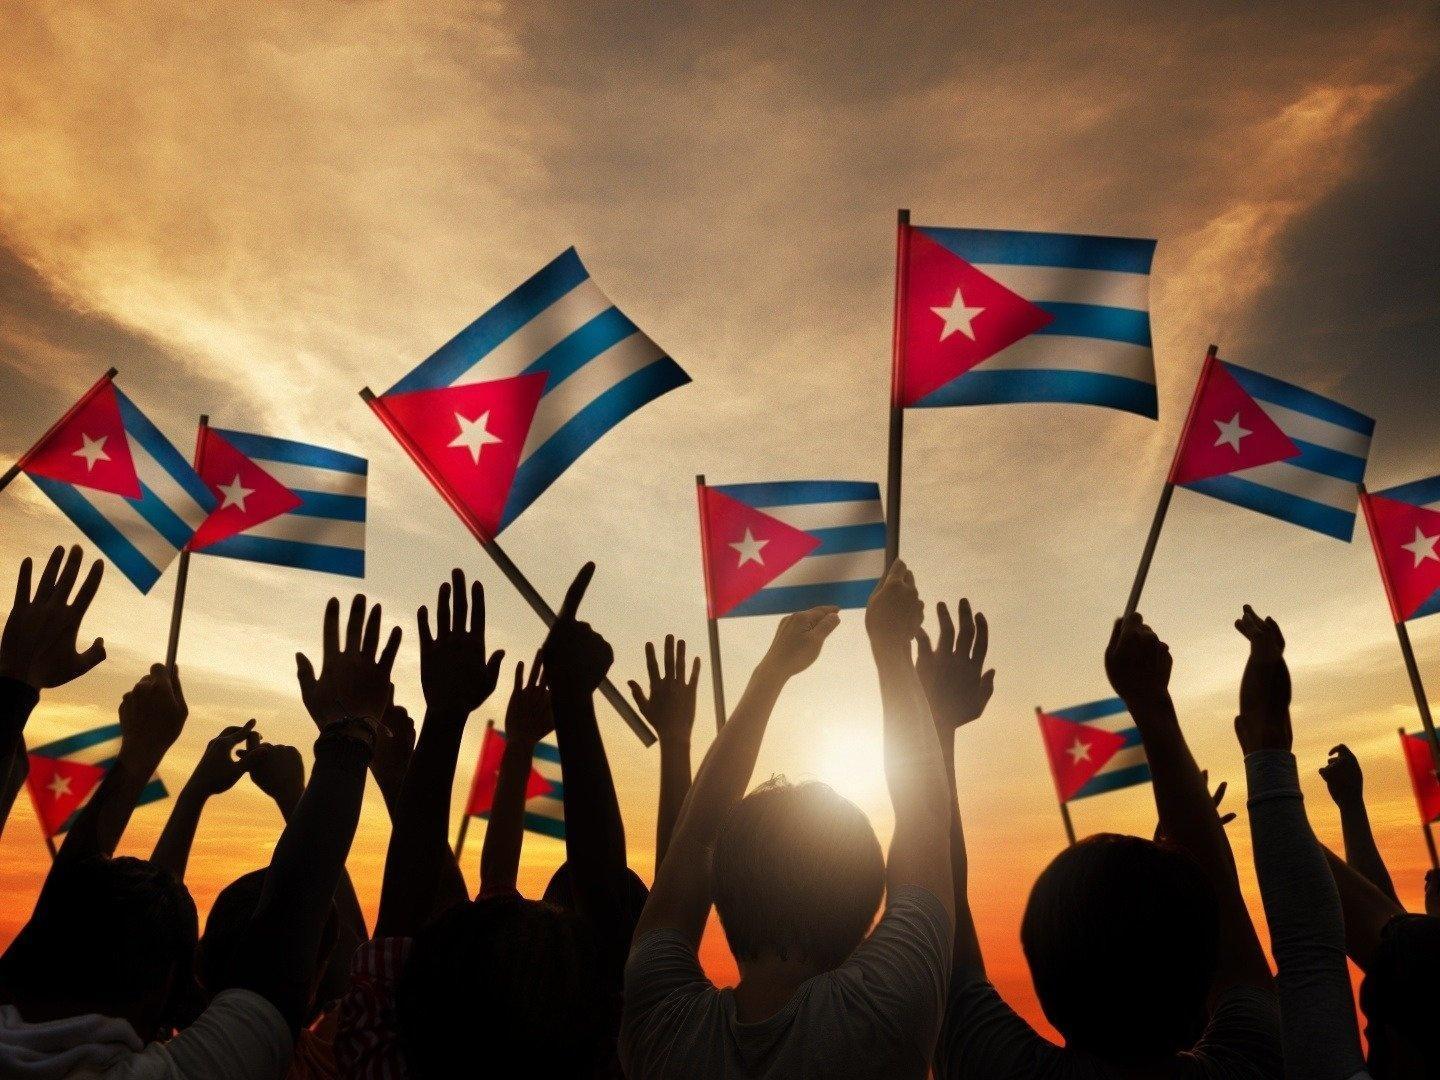 Cuban flags held aloft.